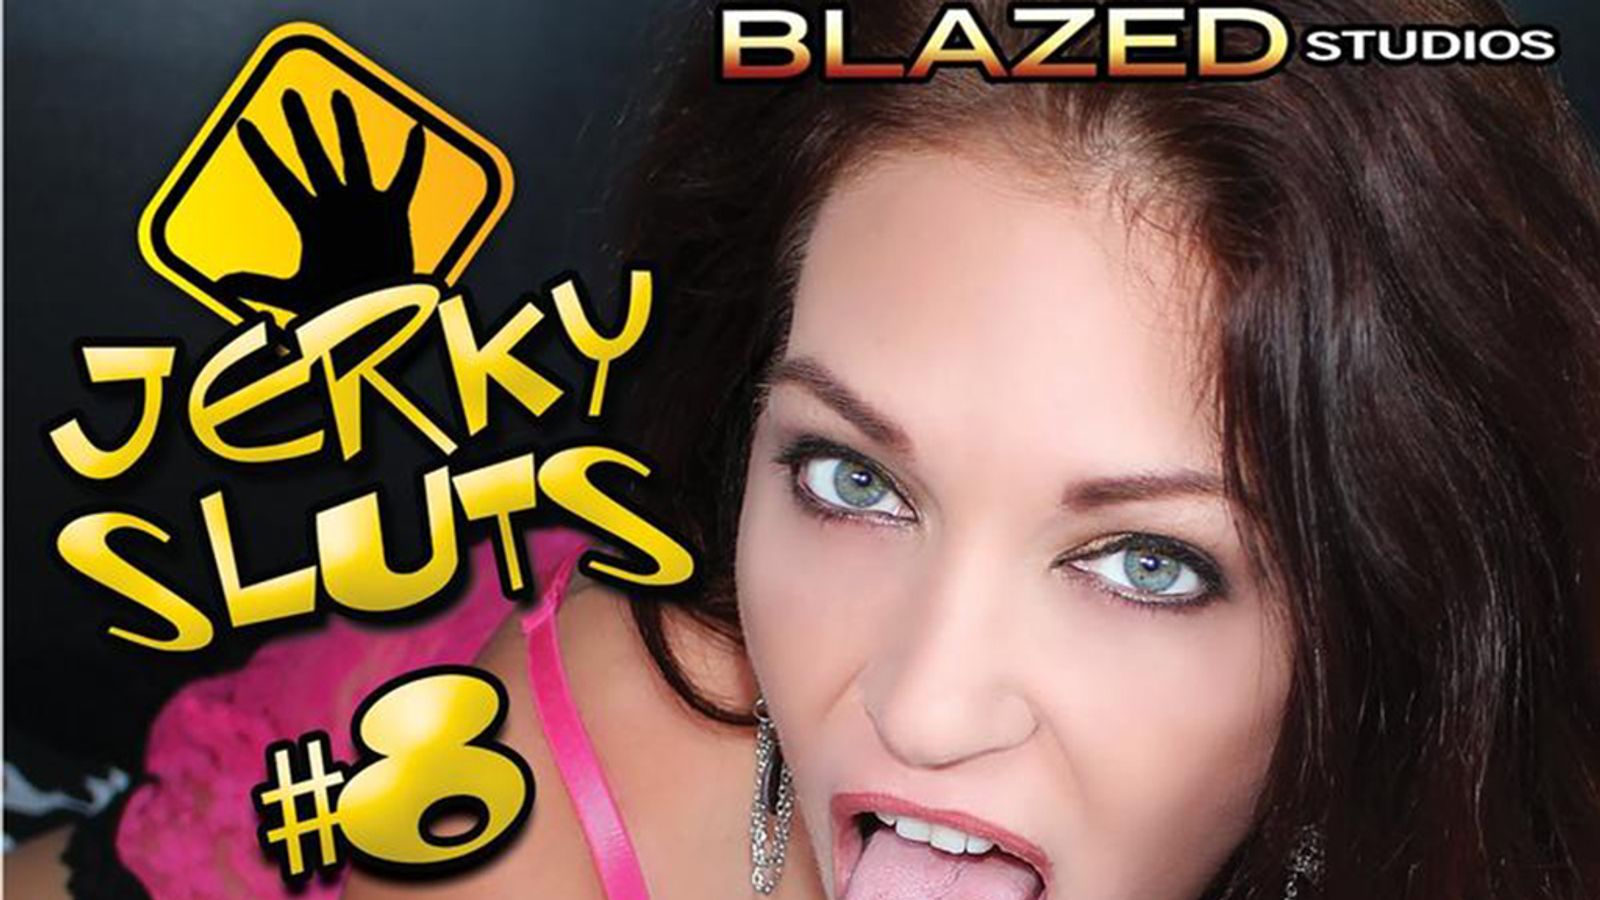 Charlee Chase Stars On Blazed Studios' ‘Jerky Sluts 8’